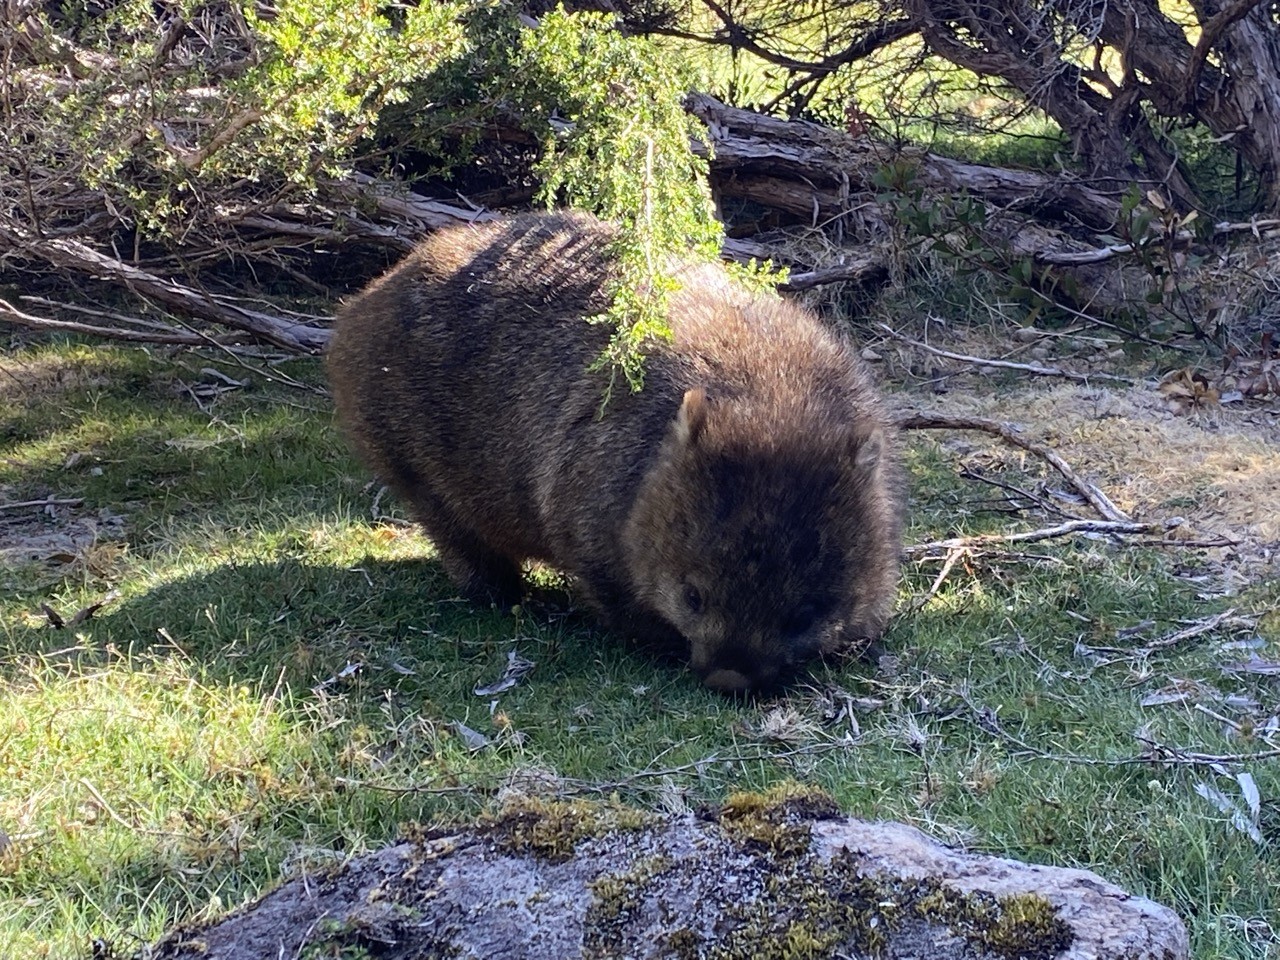 A wombat grazing. Cradle Mountain, Tasmania Australia

Photo: Sheril Kirshenbaum